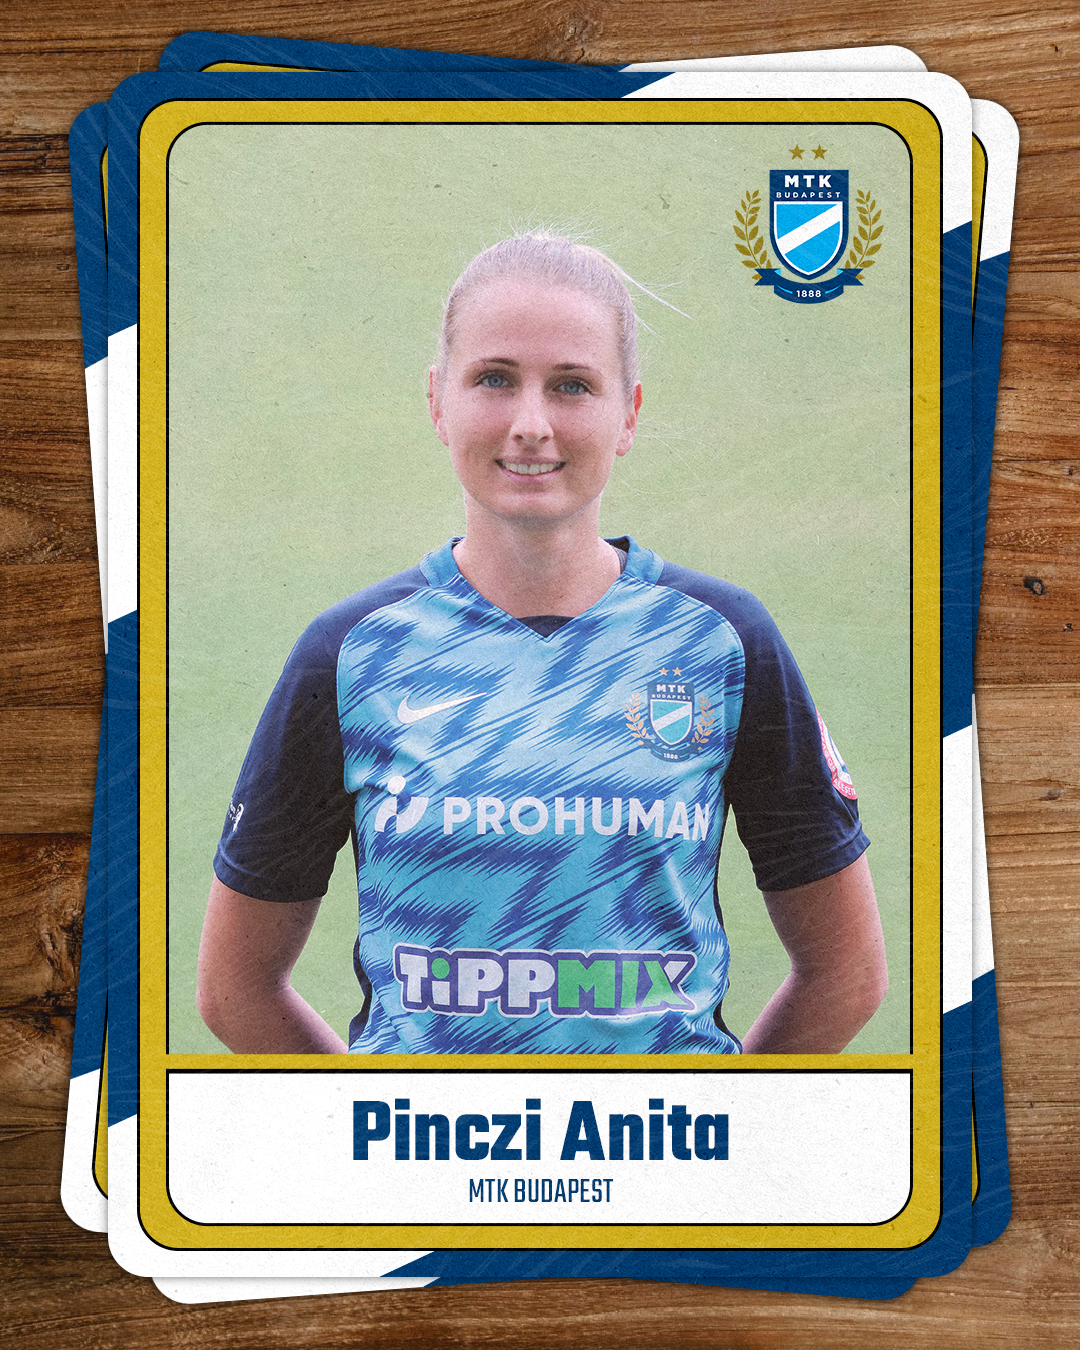 Pinczi Anita